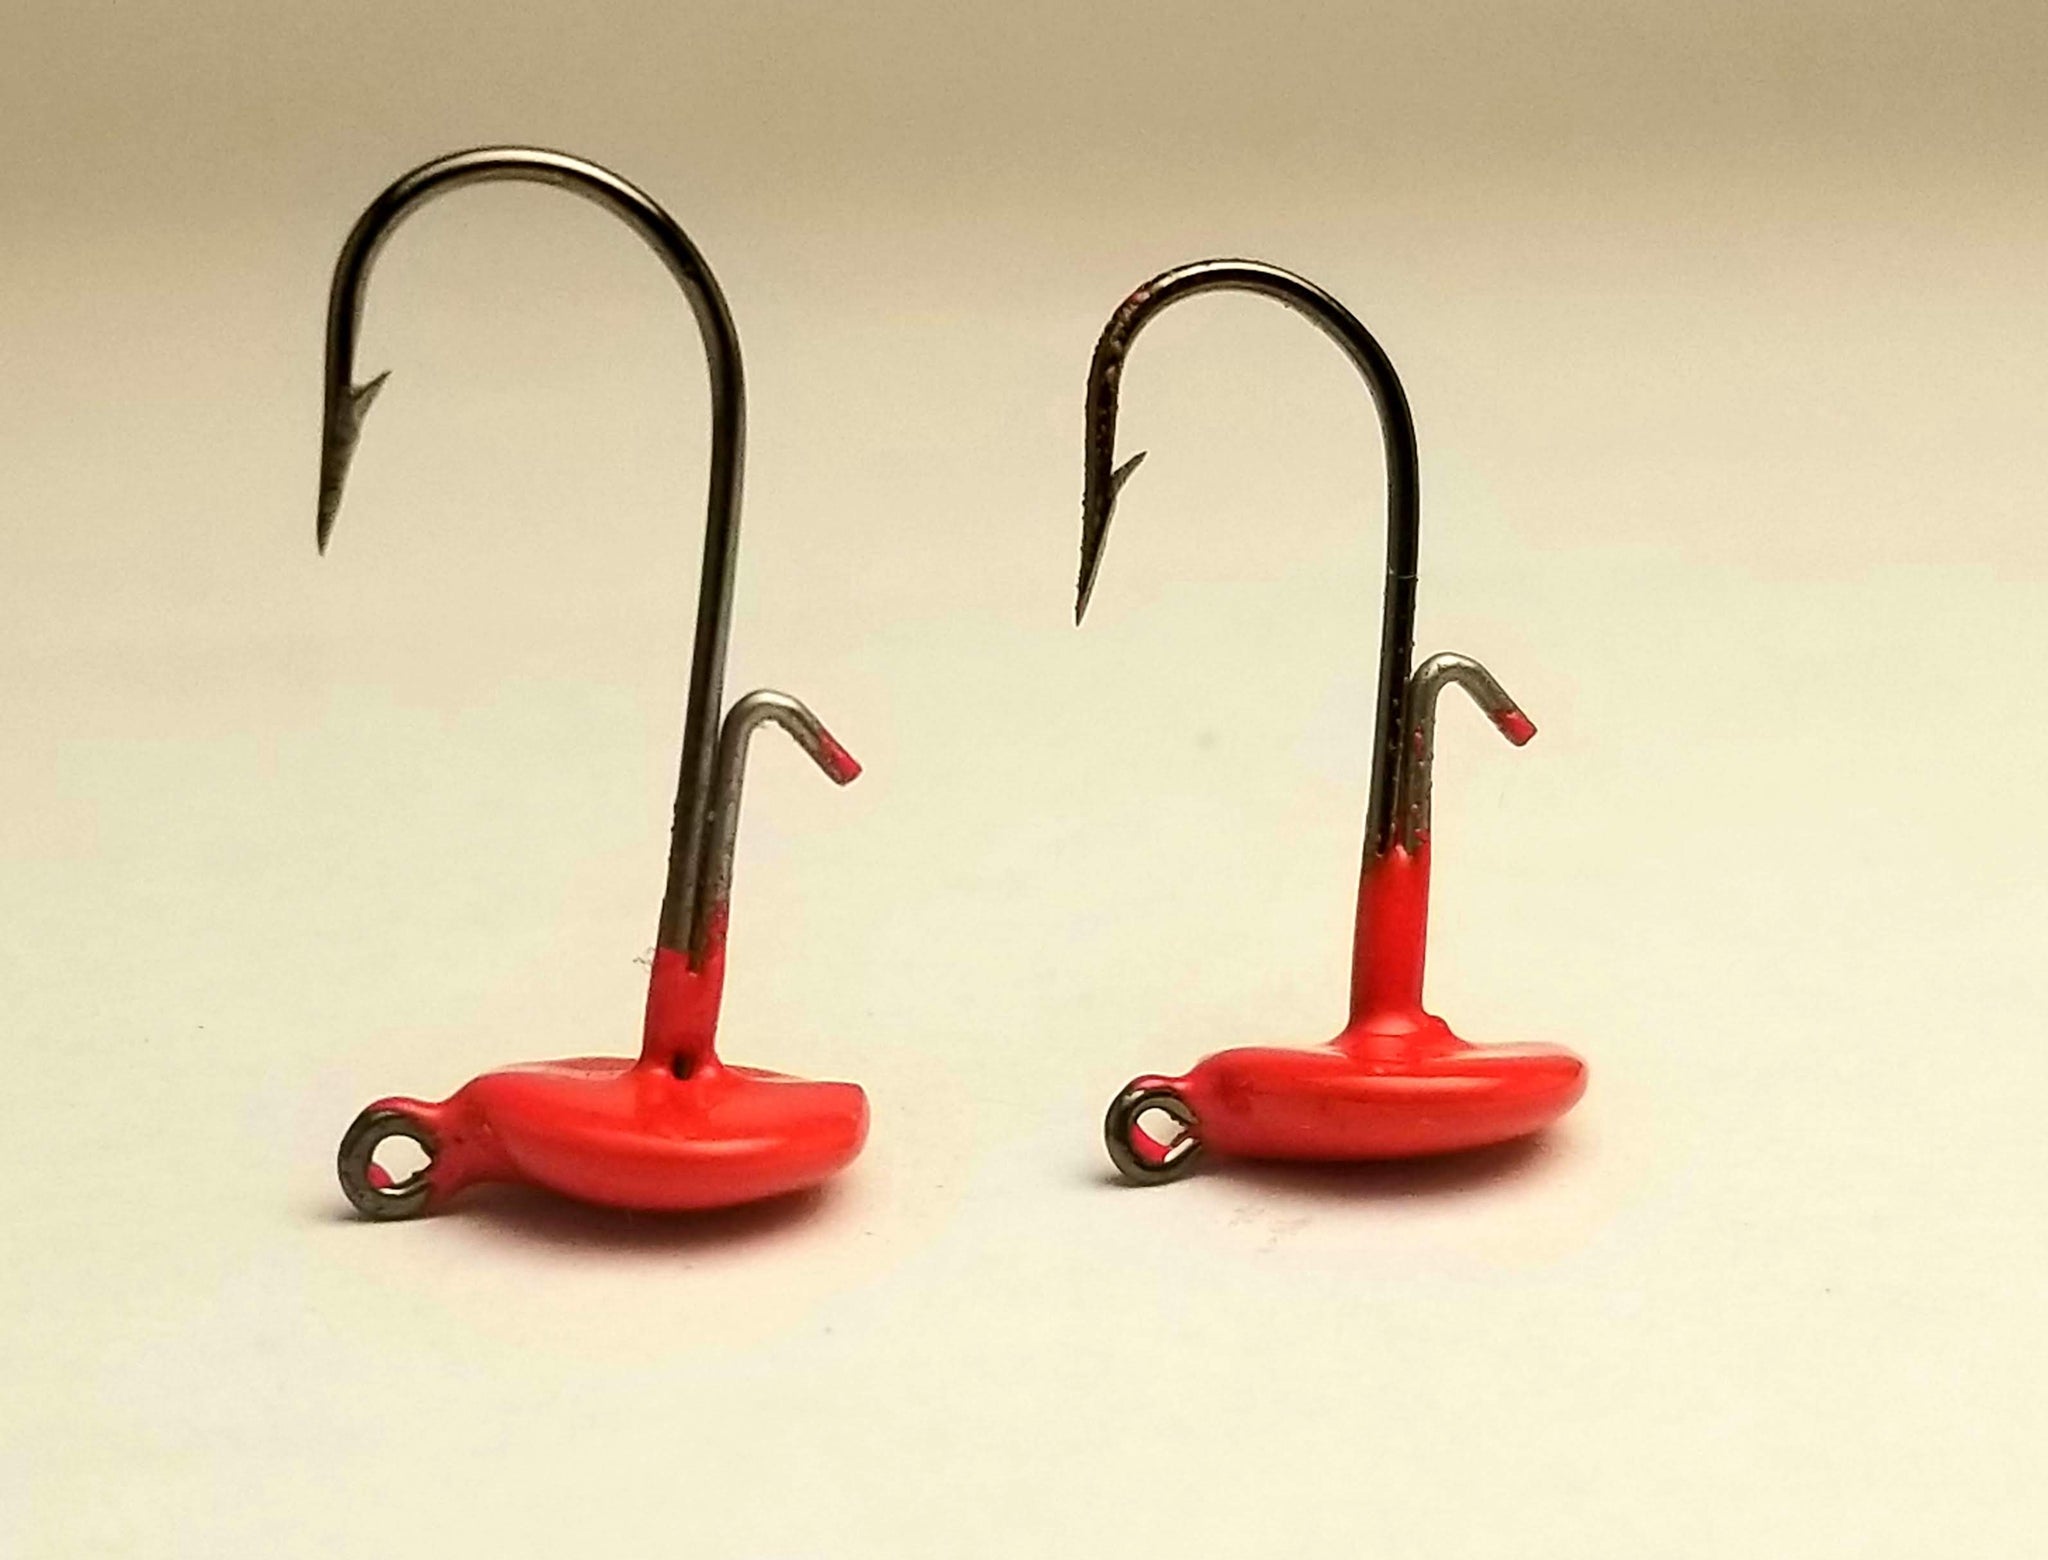 1/16 oz. Standard 90 Degree Hook Size #4 (10 Pack). - Jade's Jigs -  Lead-Free Fishing Tackle